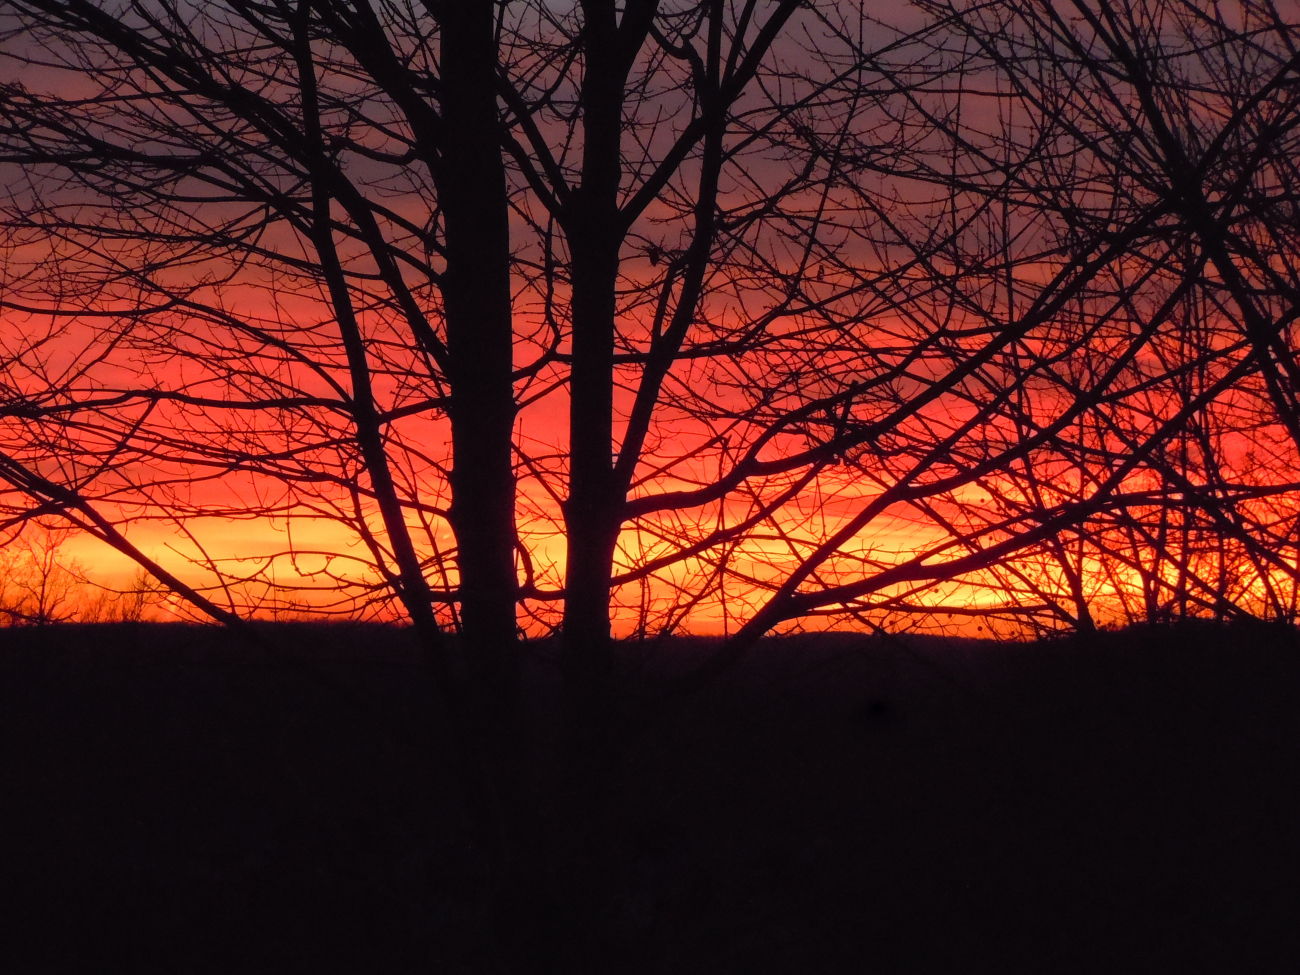 A beautiful sunset captured from backyard